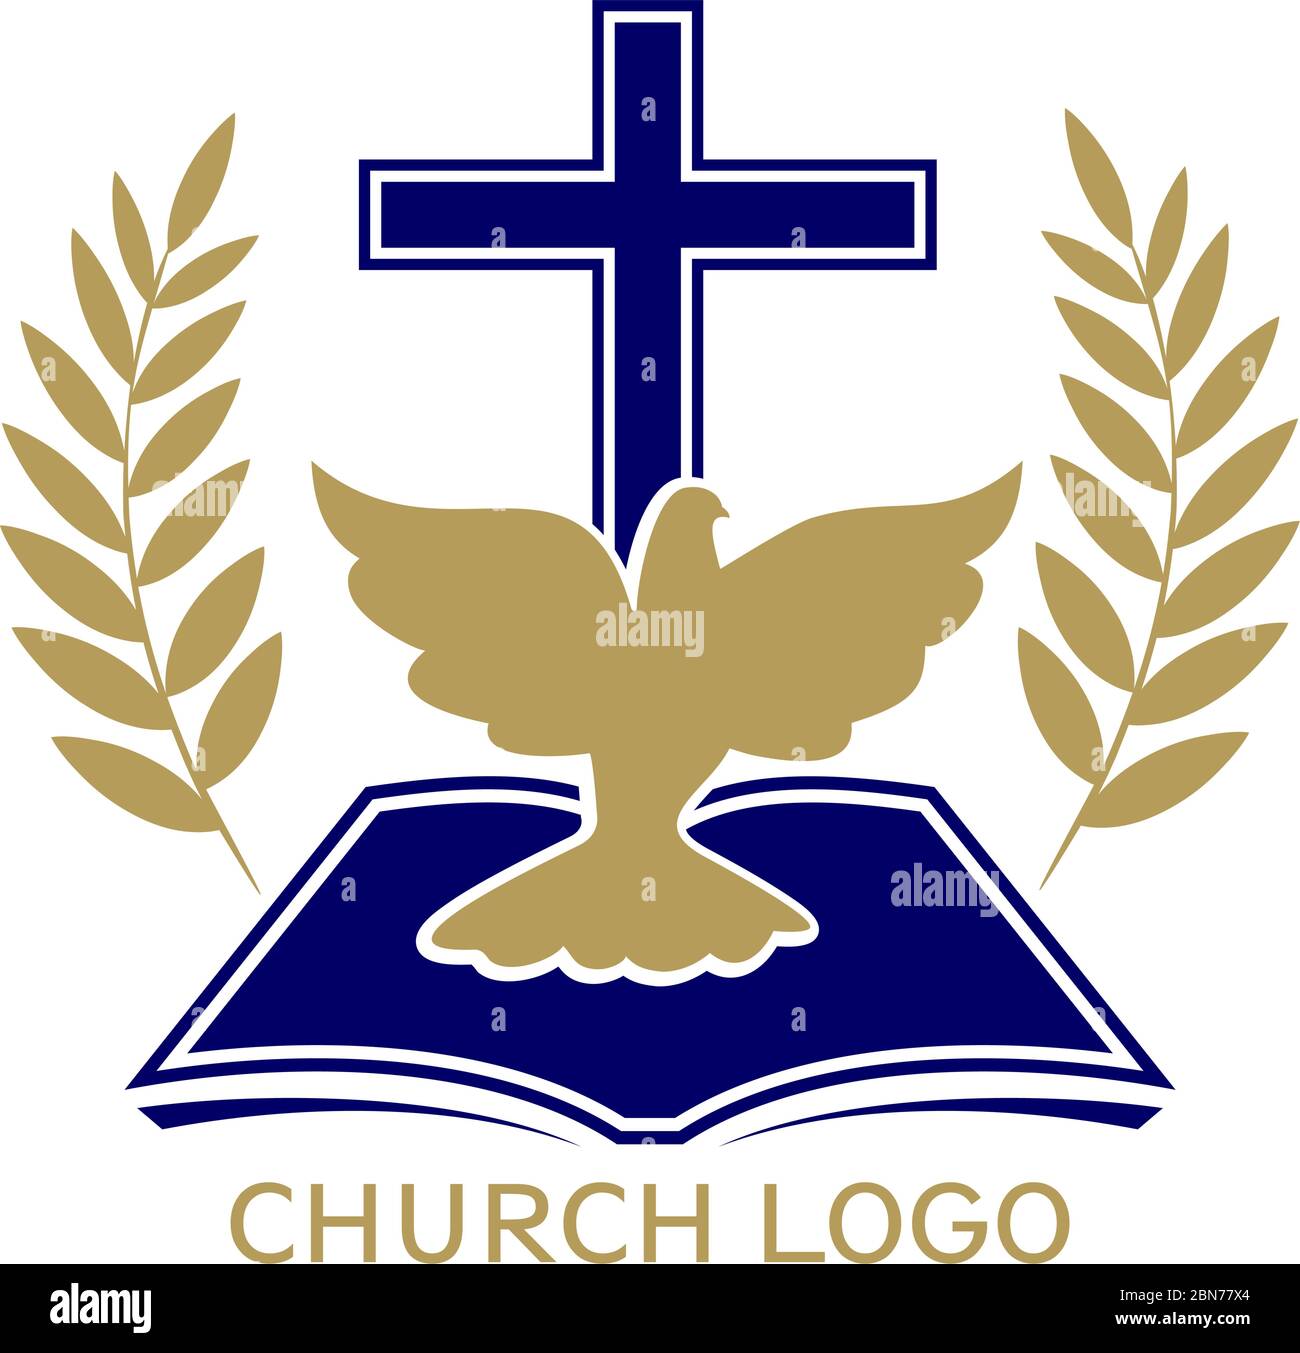 christian logos symbols